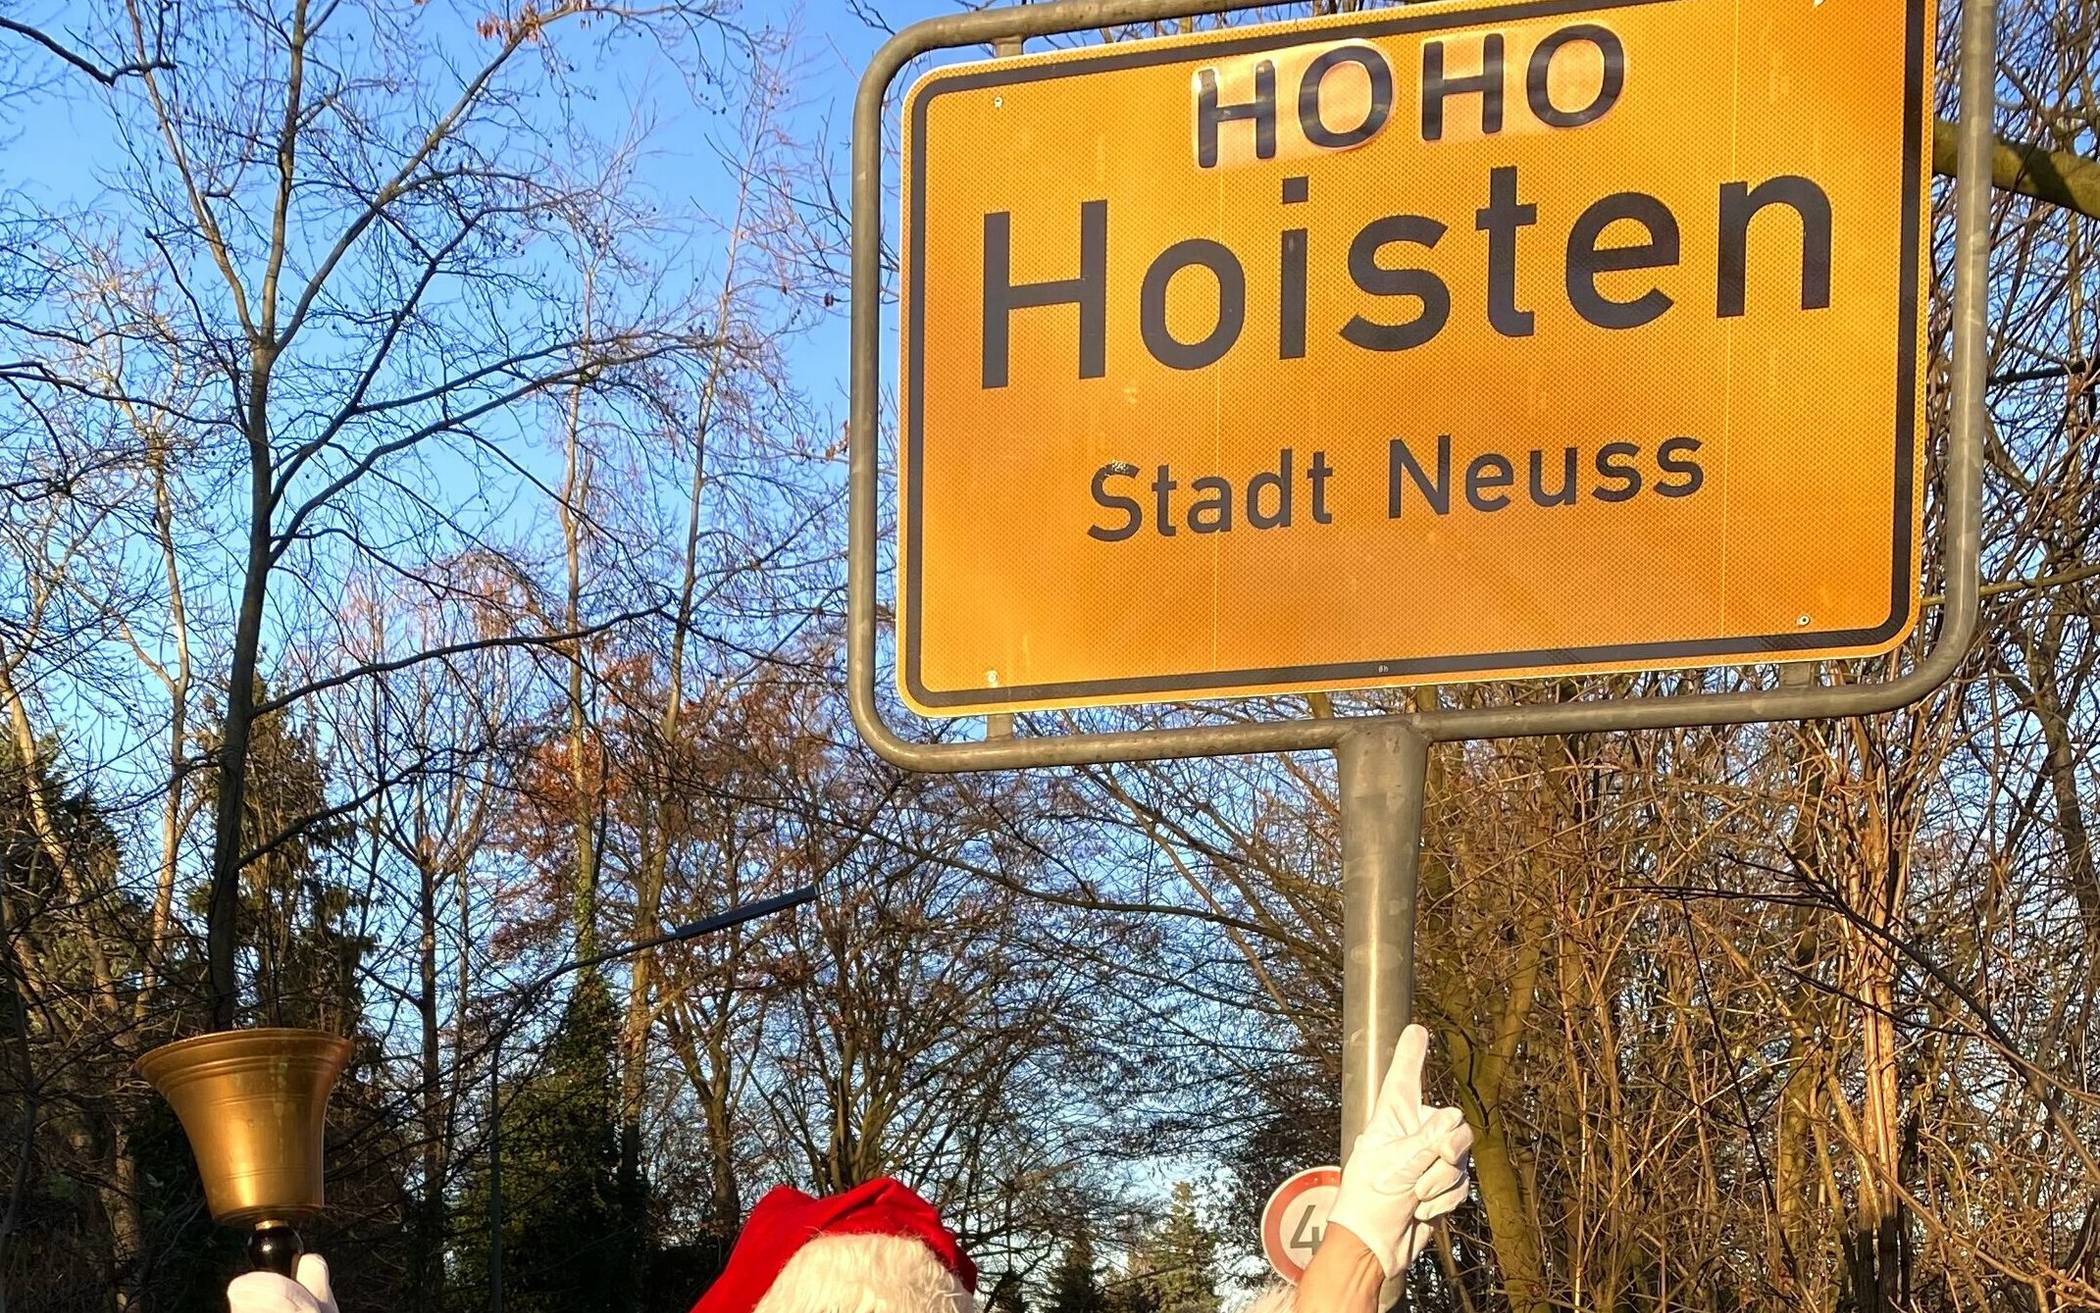  Der Weihnachtsmann eroberte Ho Ho Hoisten. 